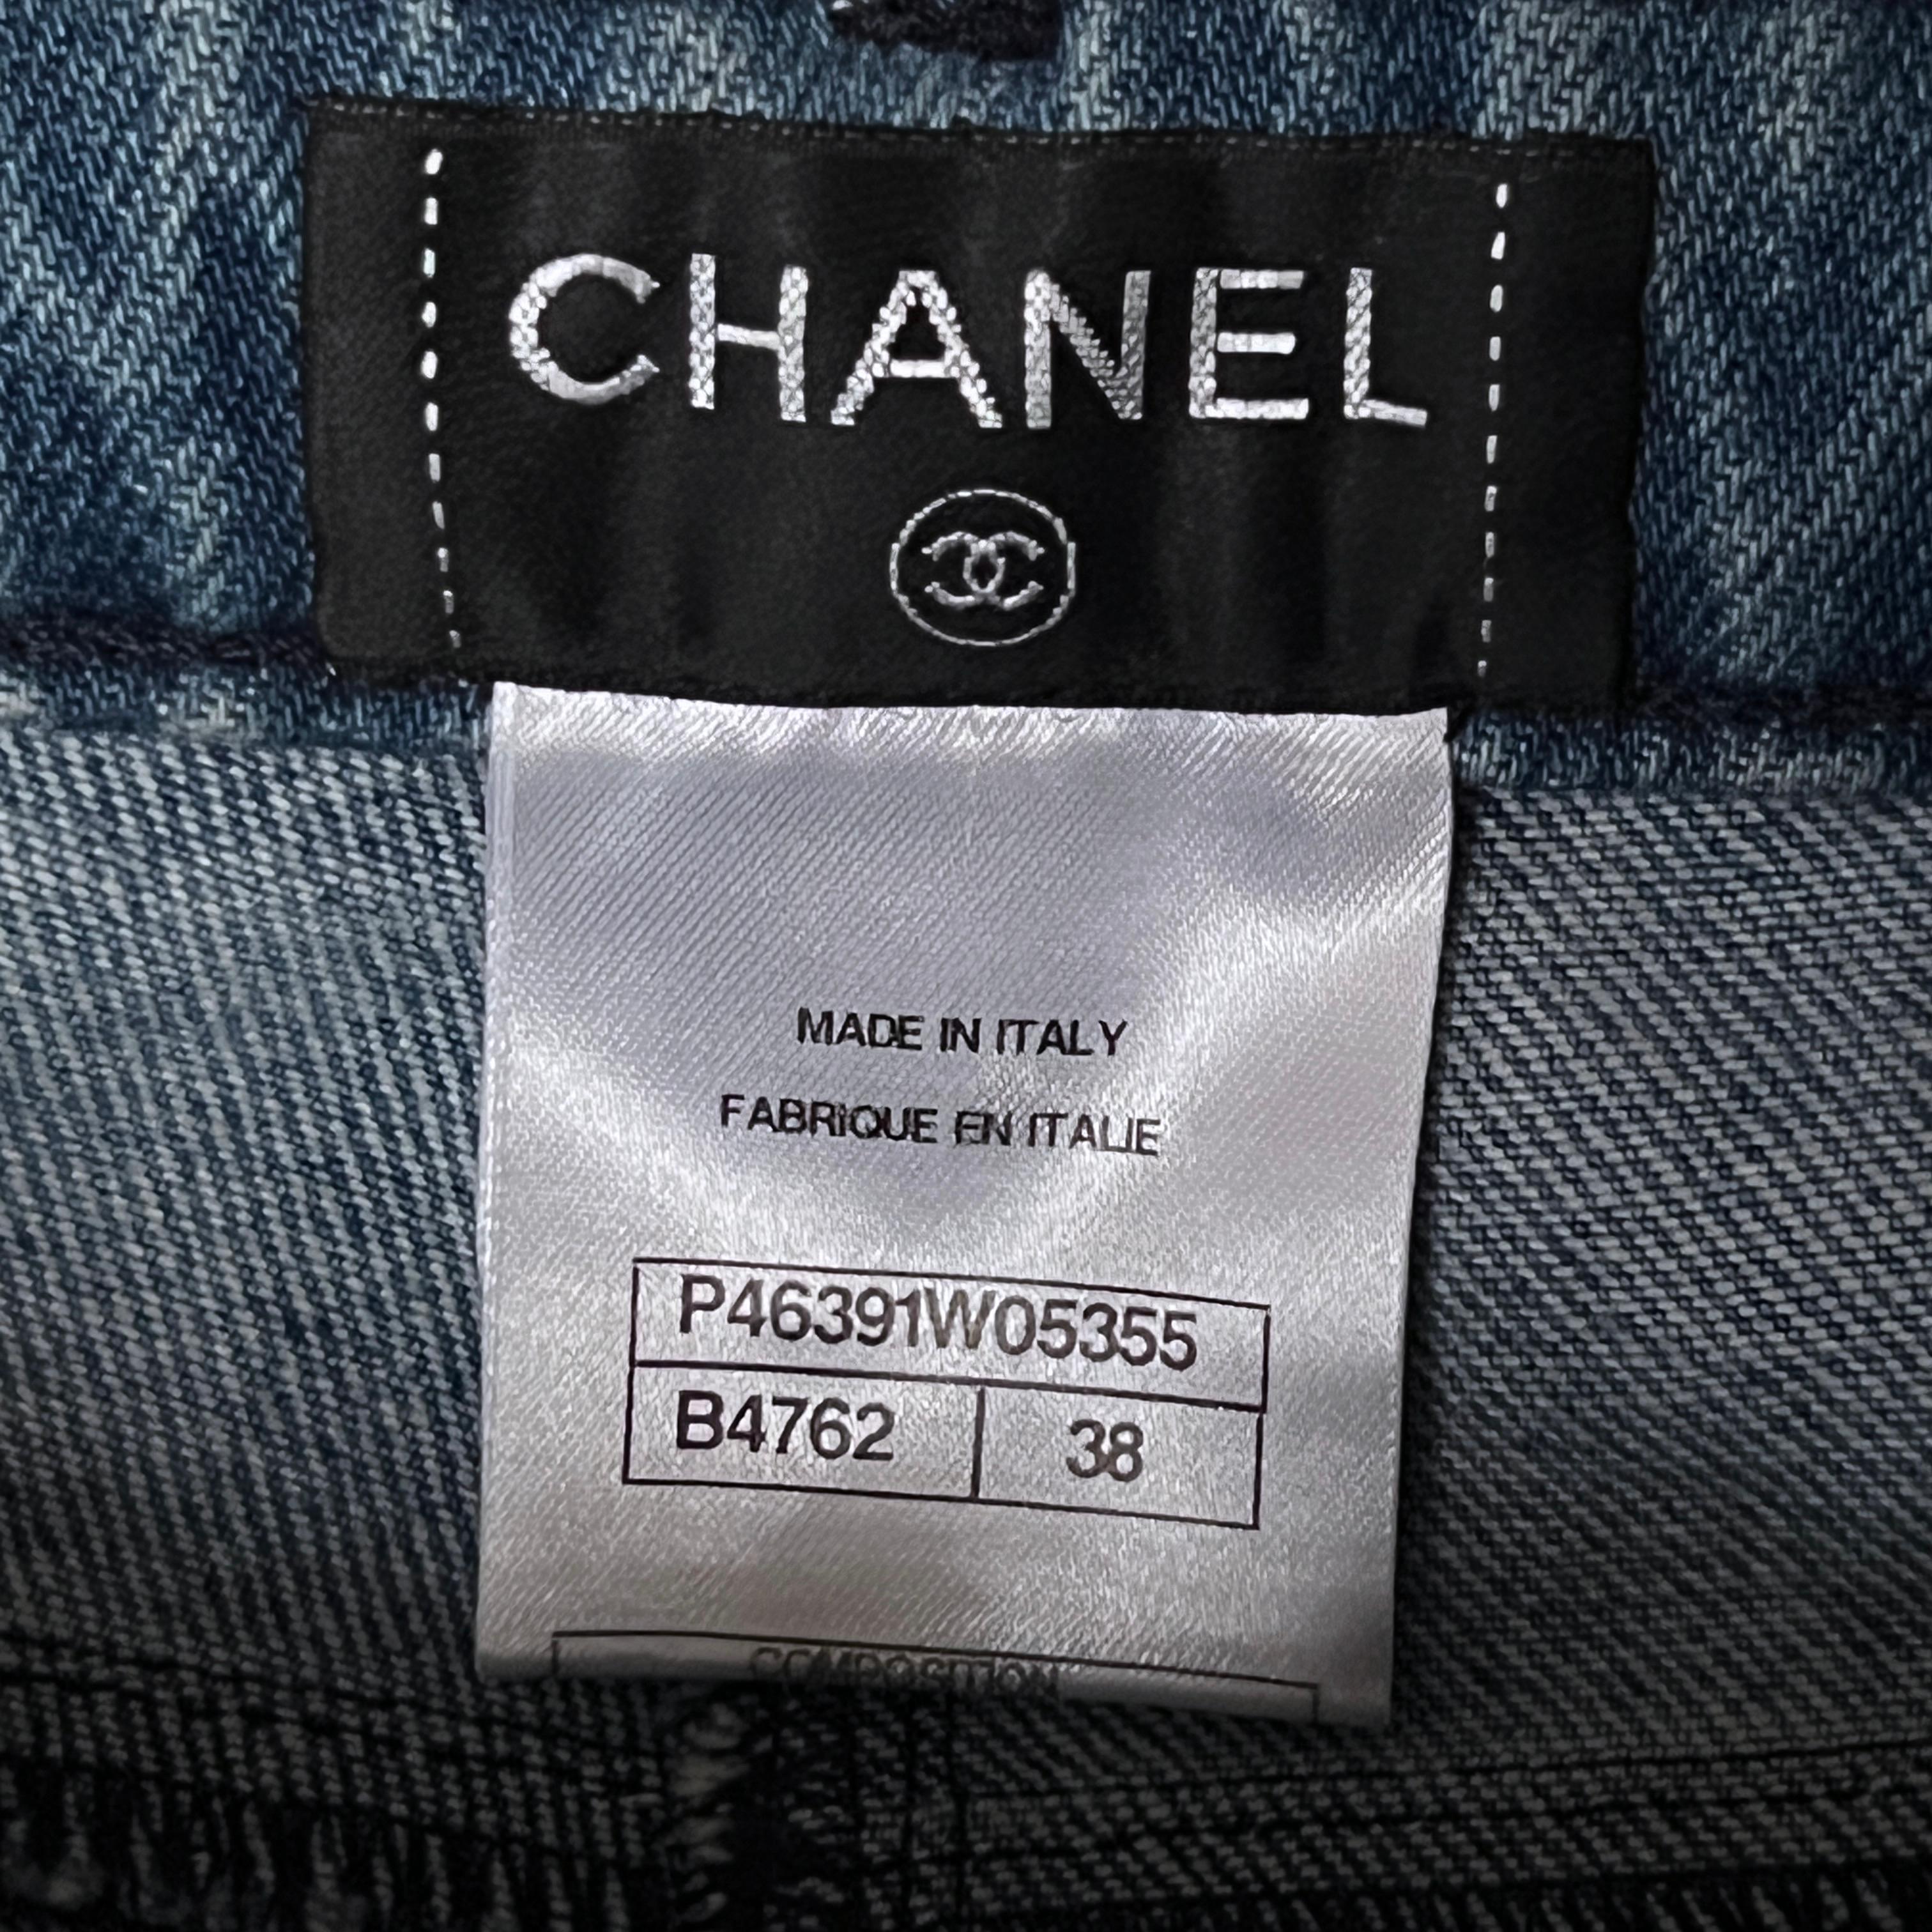 Chanel Edinburgh Tartan Blue Runway Jeans 10